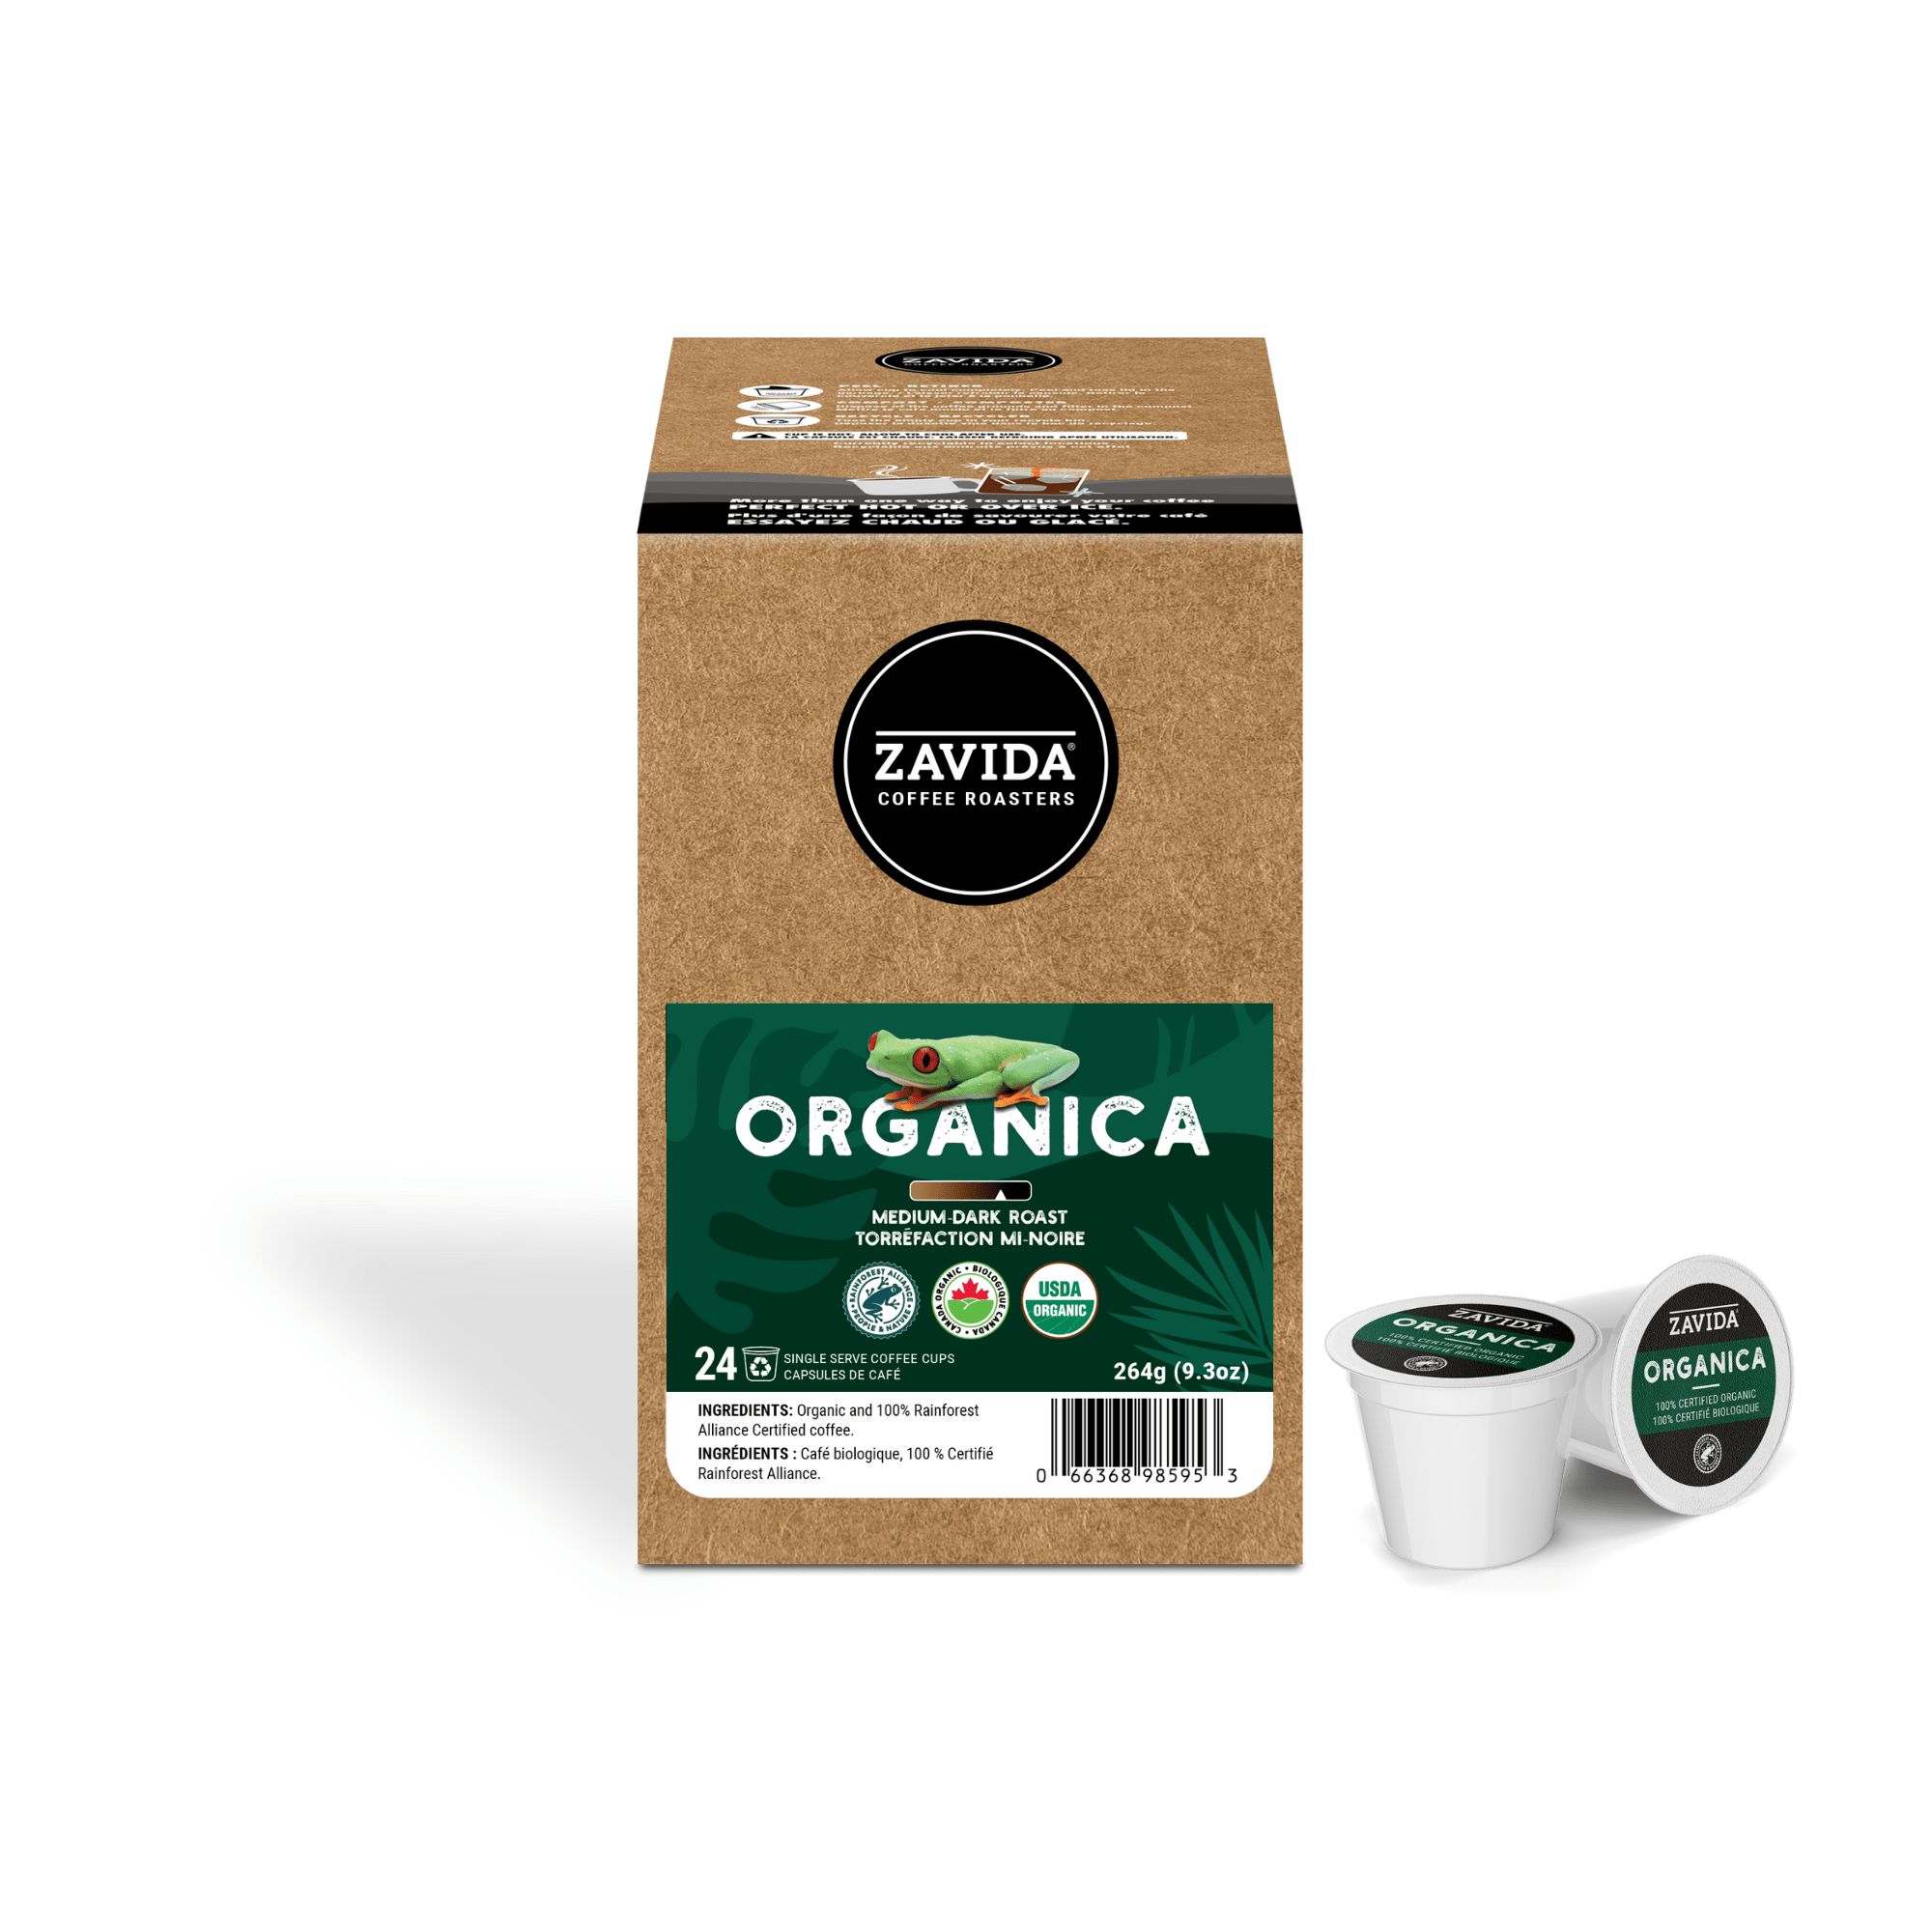 Organica Rainforest Alliance Single Serve Coffee - Medium-Dark Roast - 24 Pods - Zavida Coffee